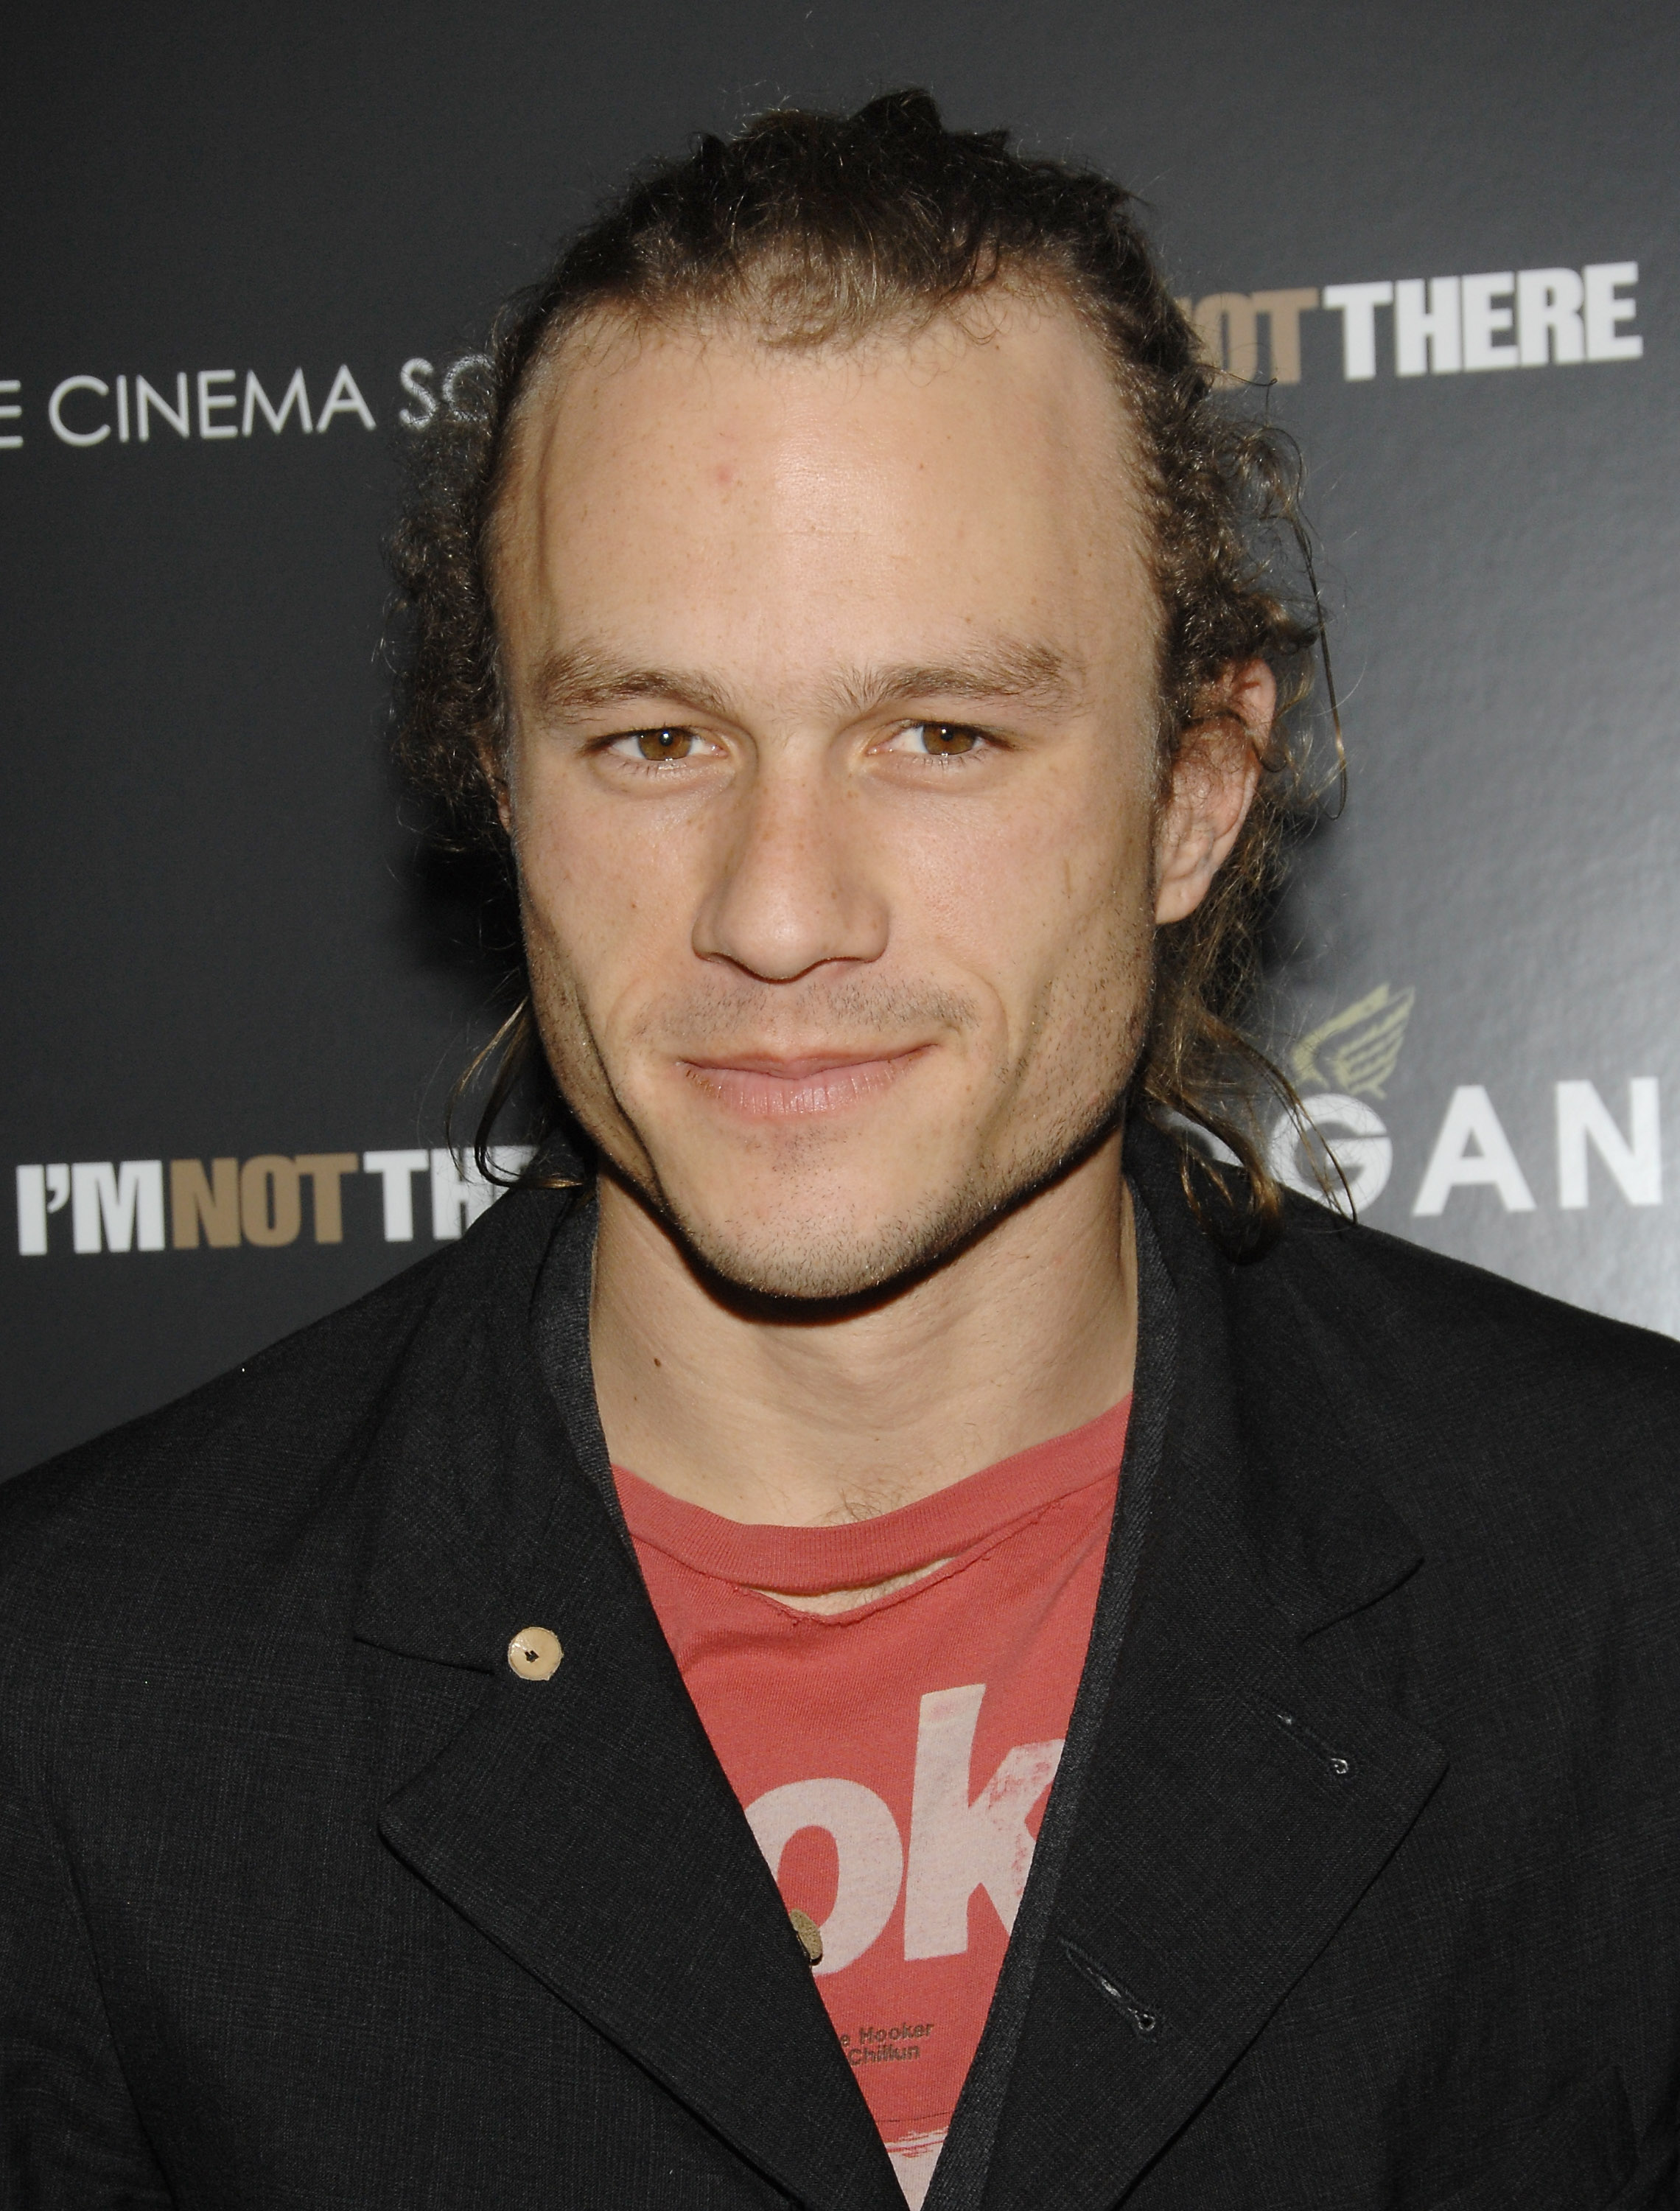 Jokerlegenden Heath Ledgers dog 2008 av en överdos som orsakats av bland annat diazepampreparatet.